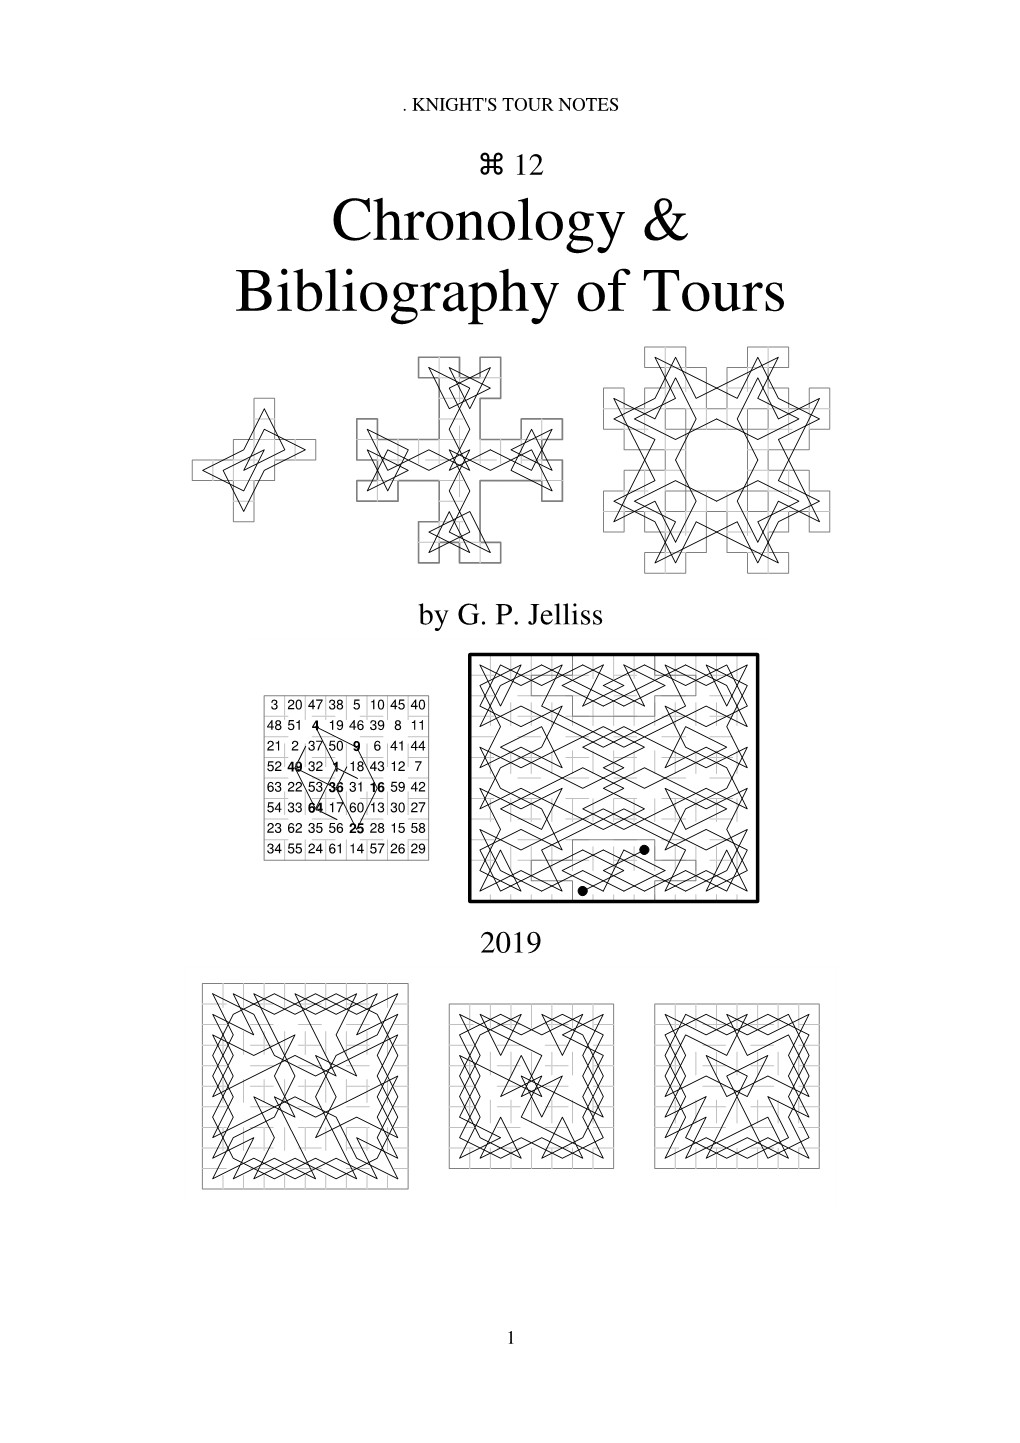 Chronology & Bibliography